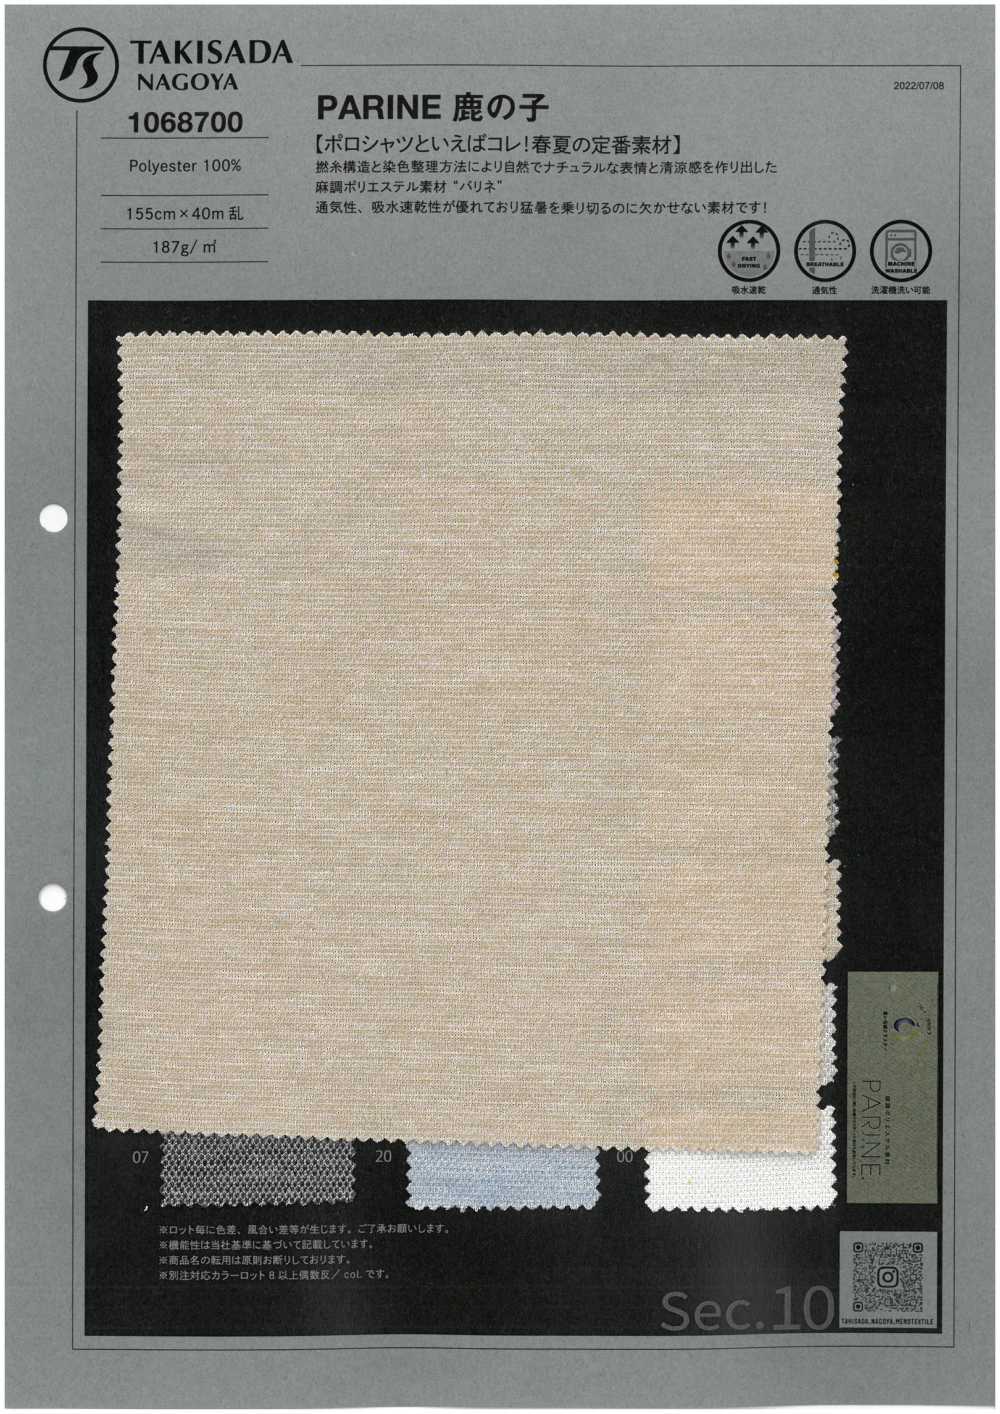 1068700 PARINE Perlstich[Textilgewebe] Takisada Nagoya